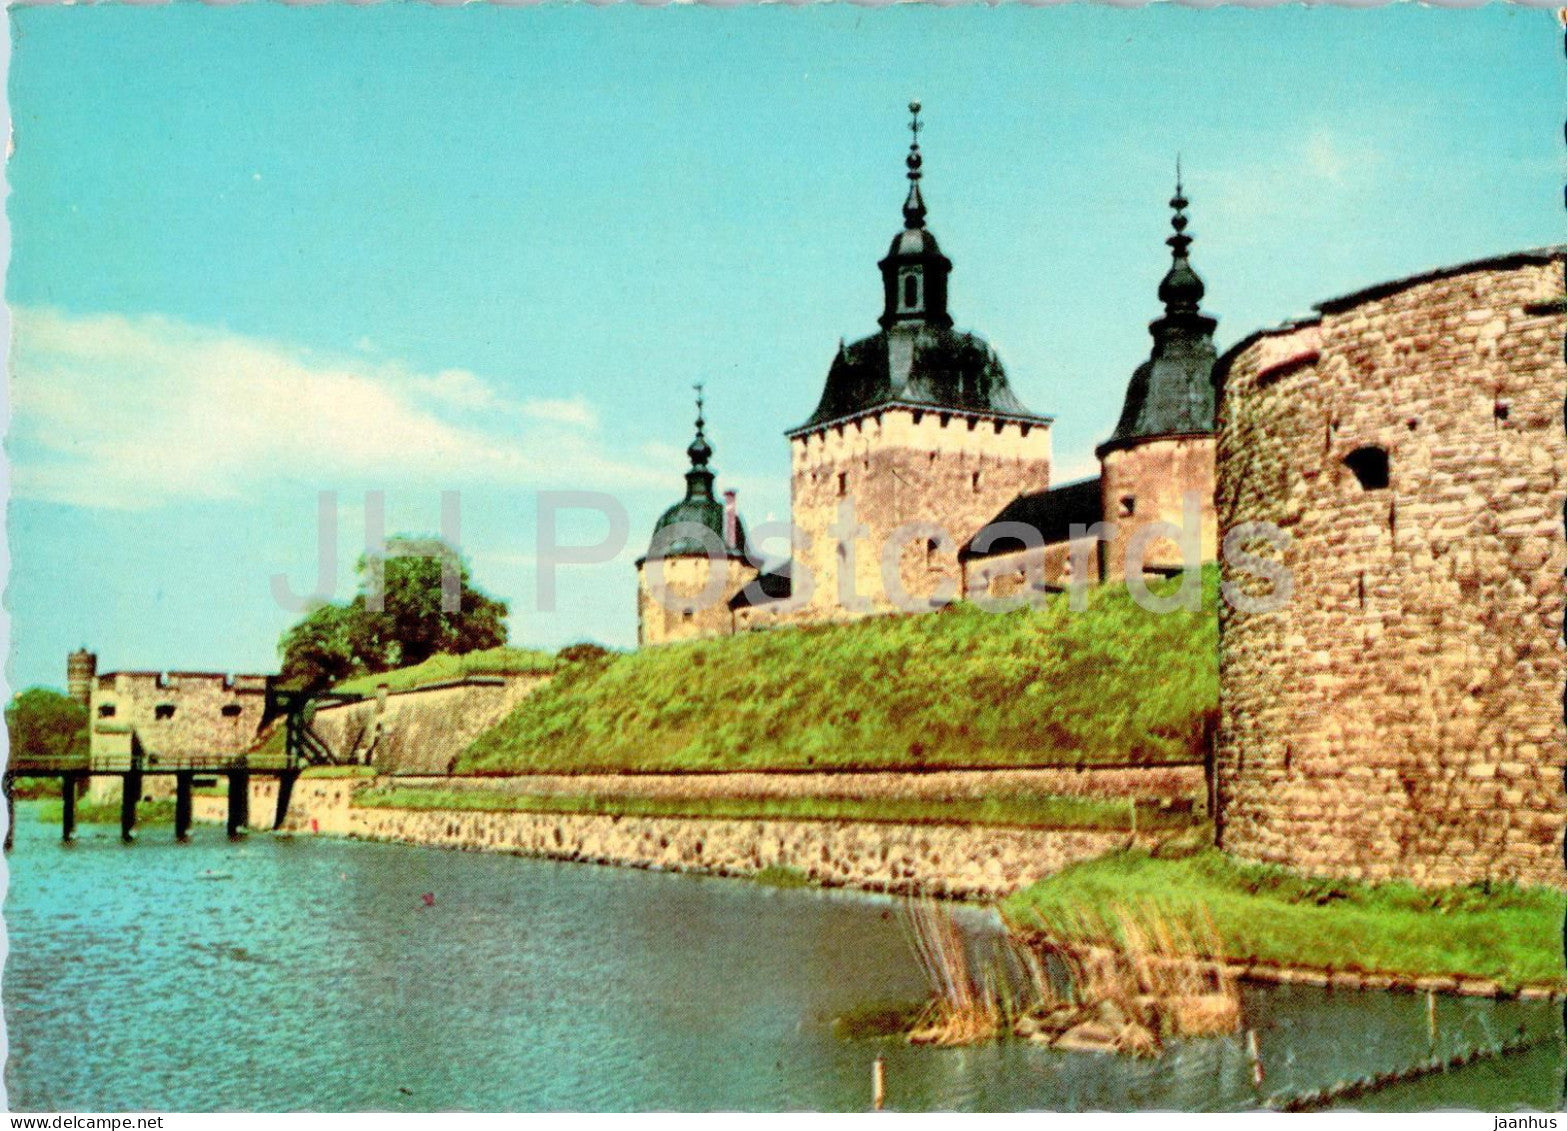 Kalmar Slottet - Parti fran vallgraven - moat - castle - 211 - Sweden - unused - JH Postcards